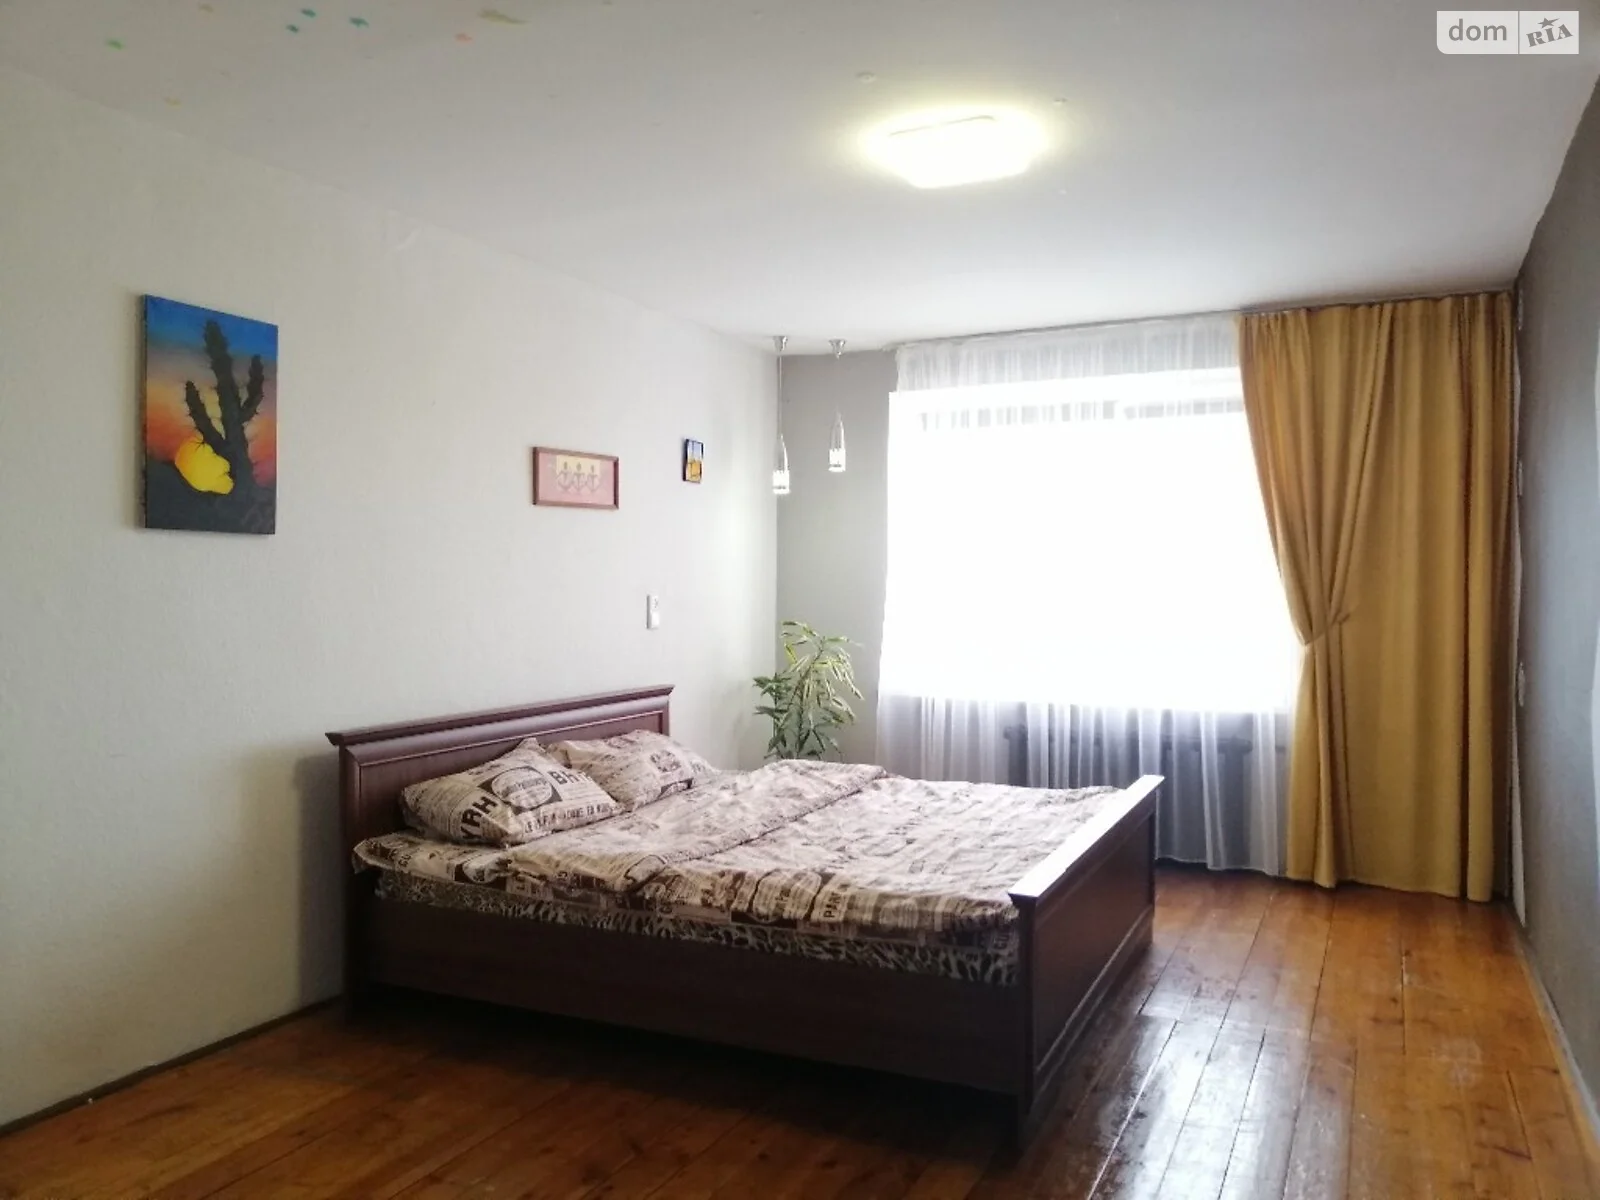 1-кімнатна квартира у Тернополі, цена: 730 грн - фото 1